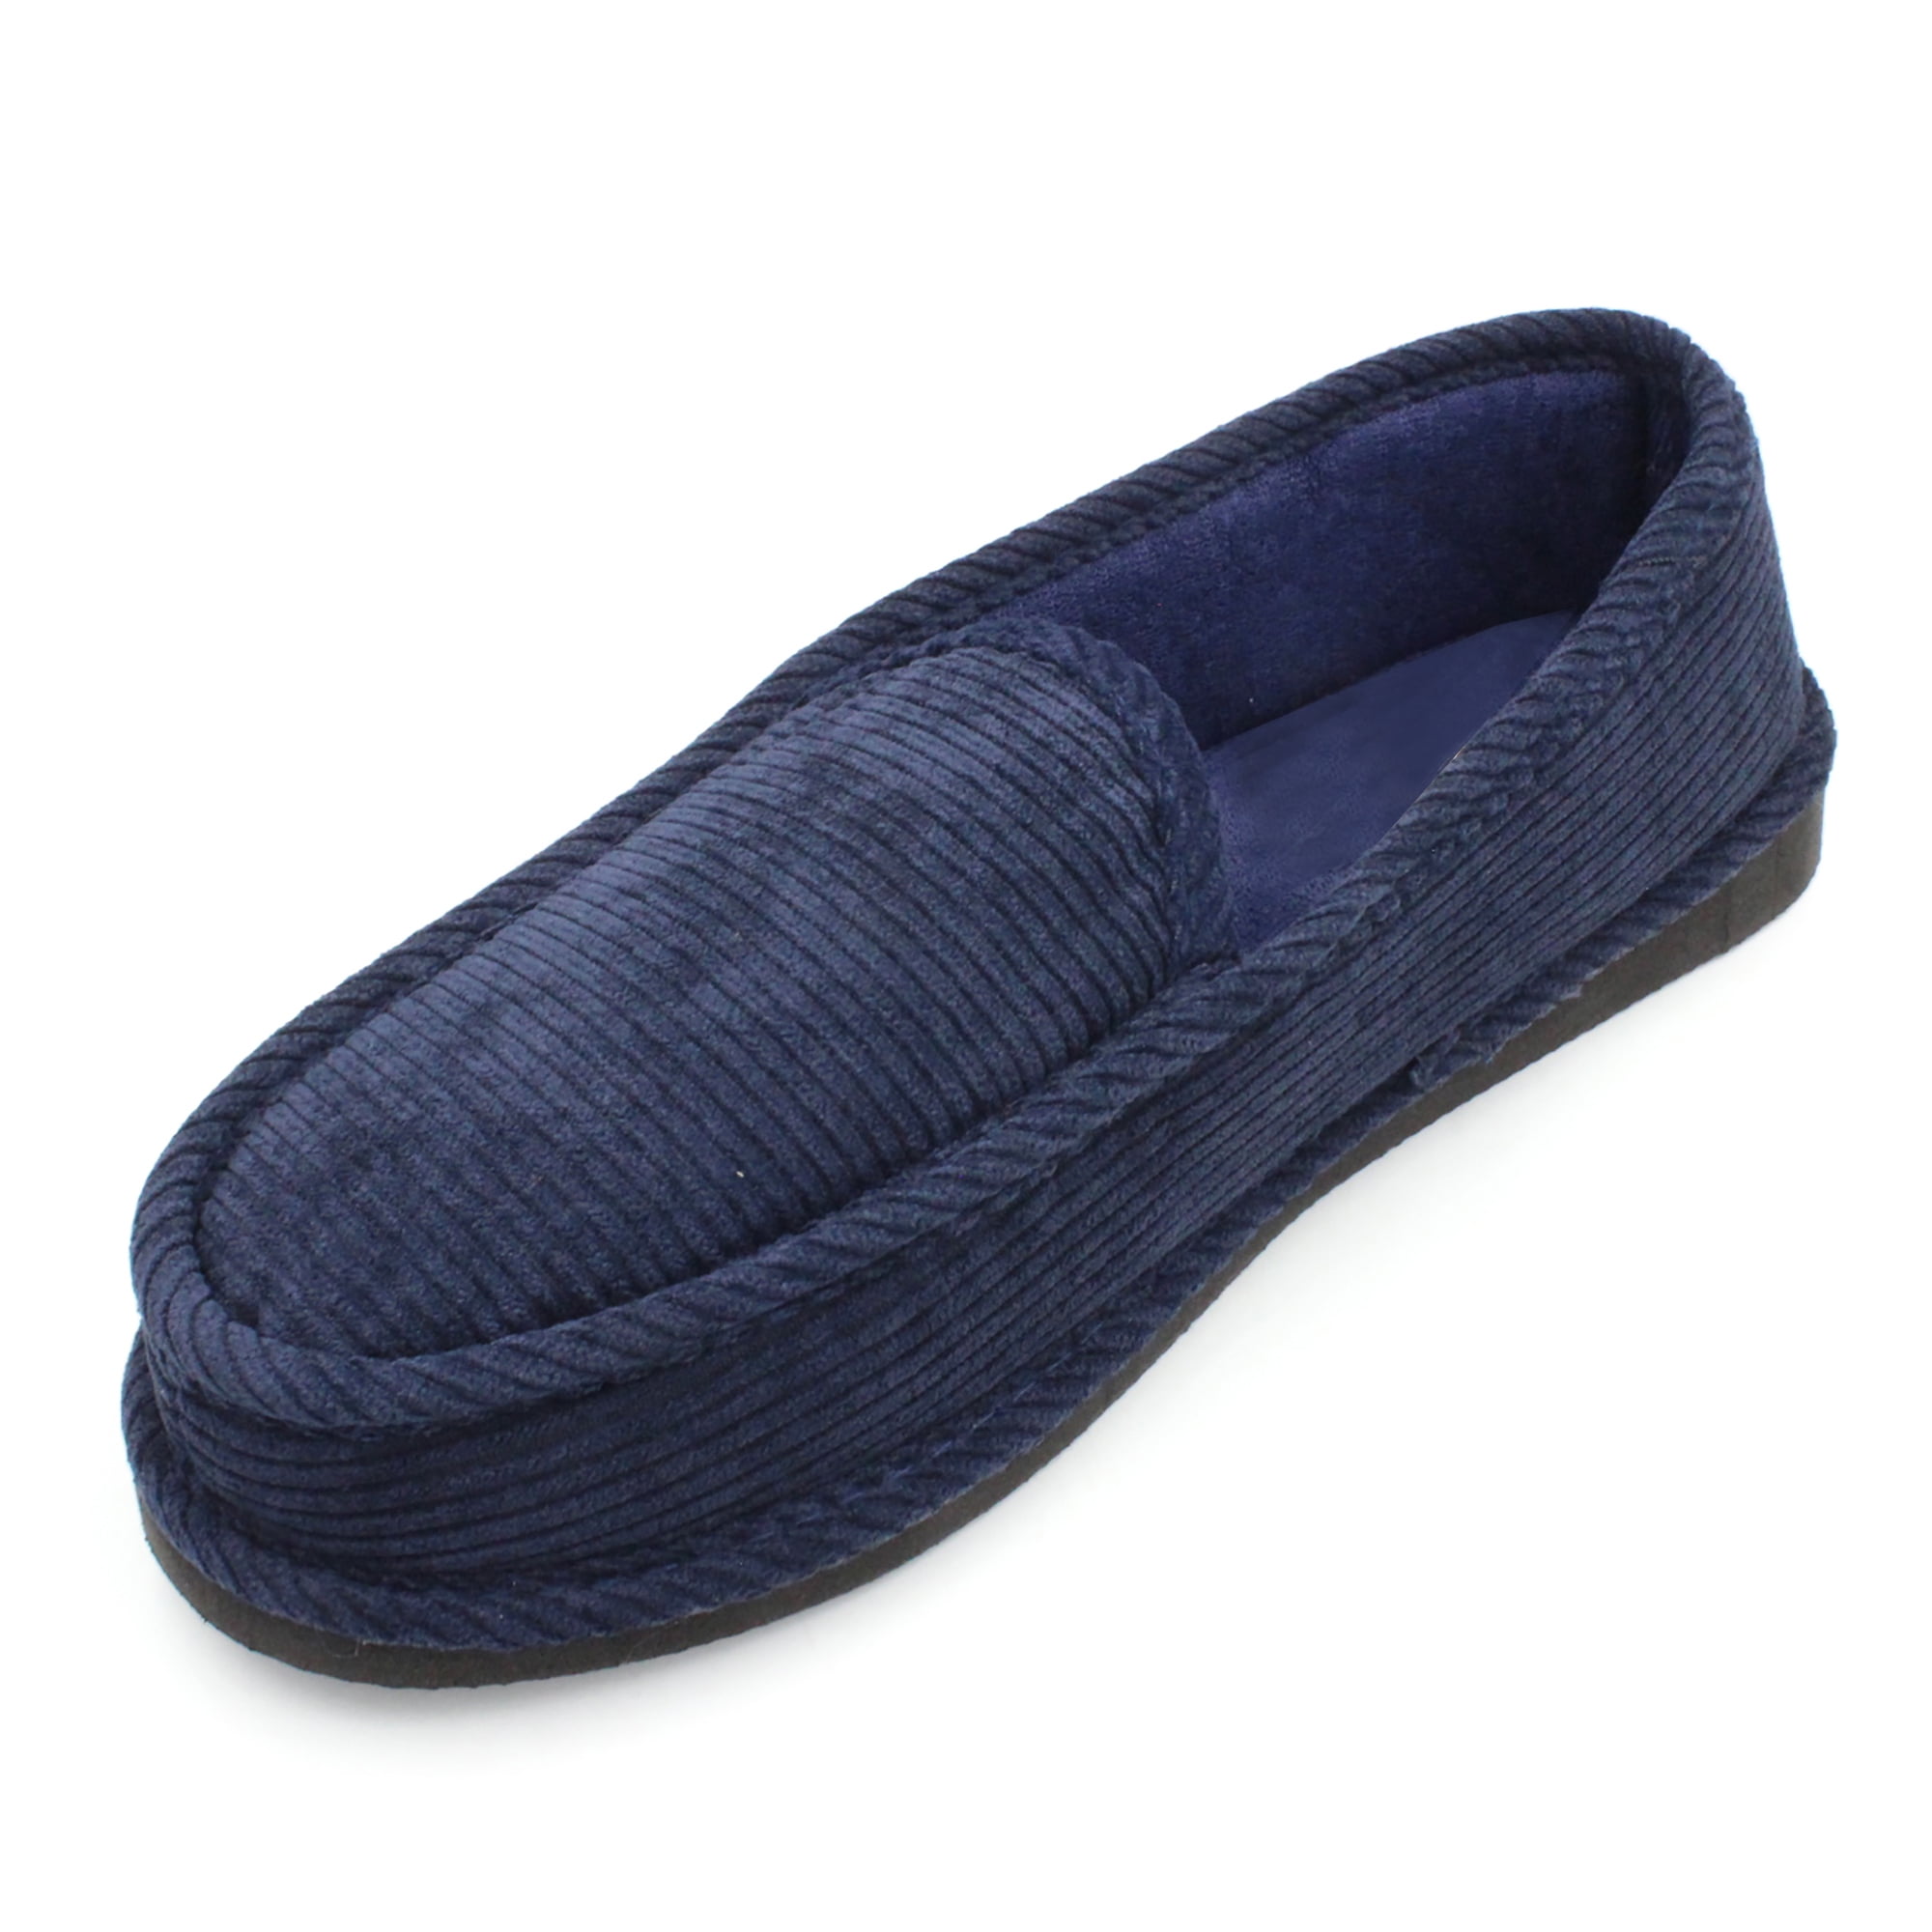 Slippers men blue toweling woven